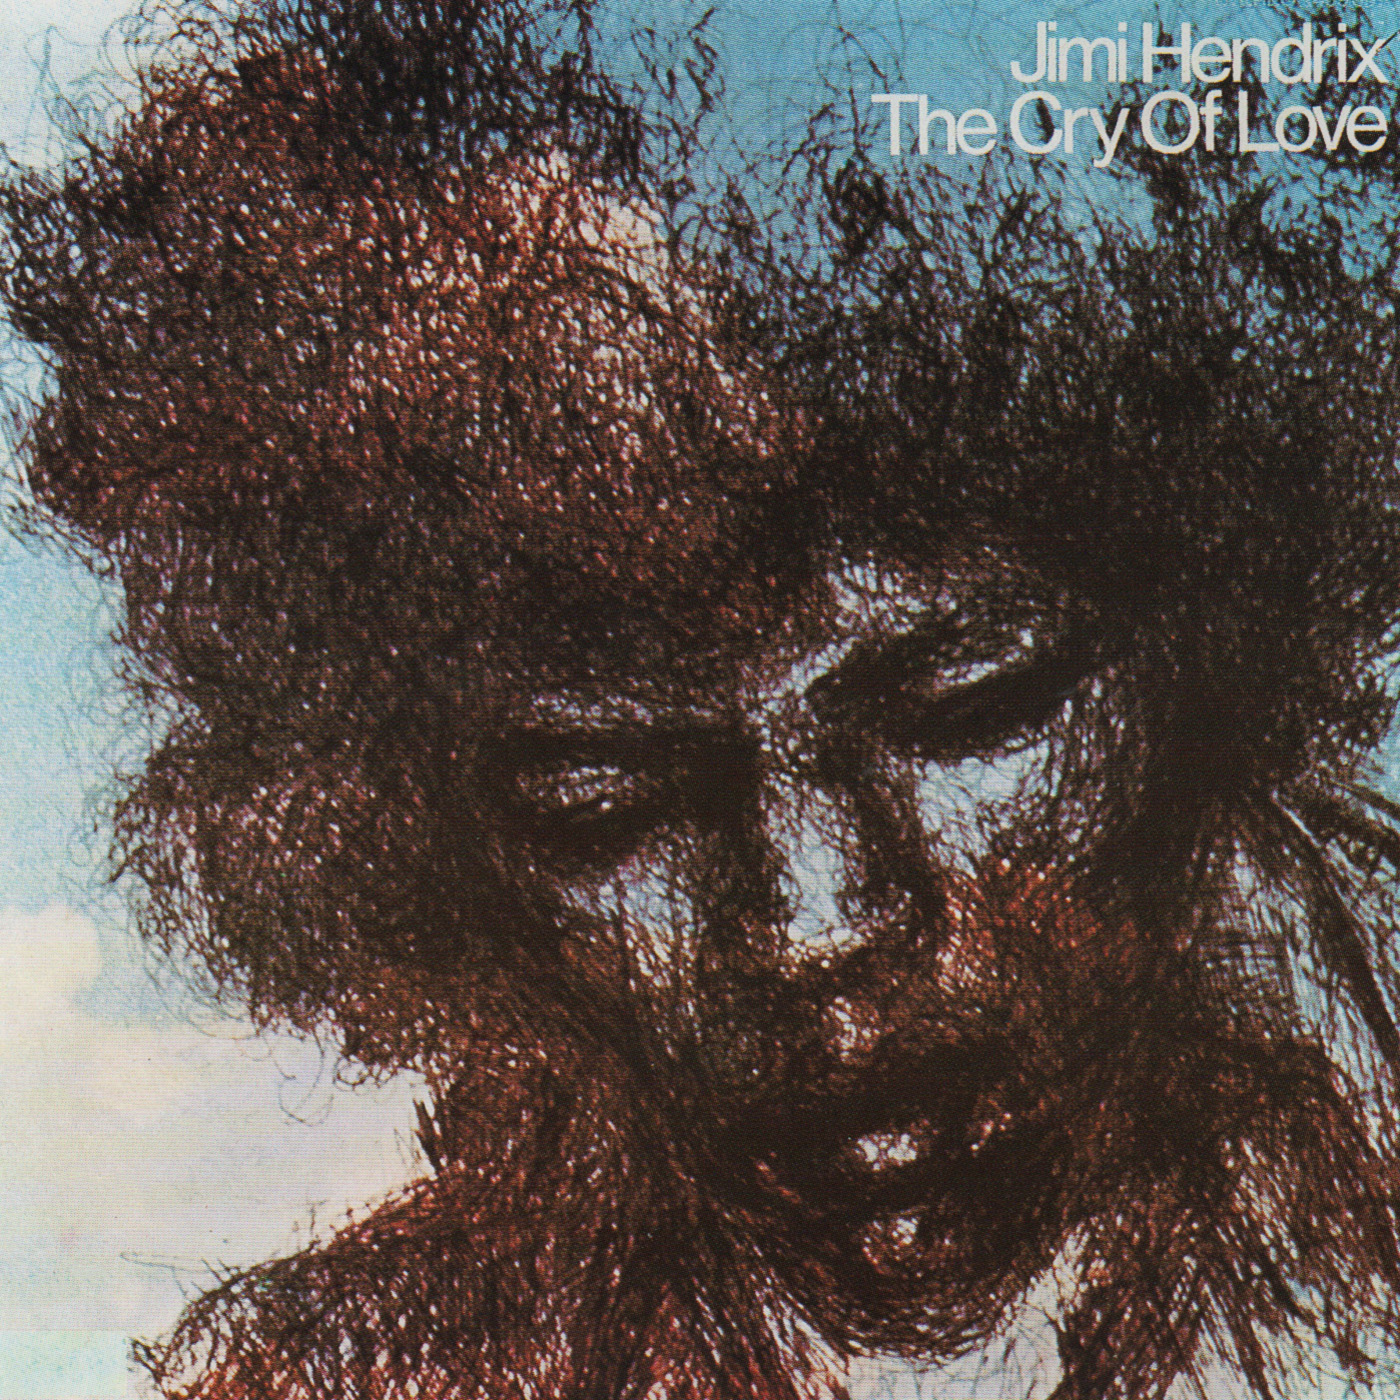 Jimi Hendrix-1971-The Cry Of Love [847 242-2]